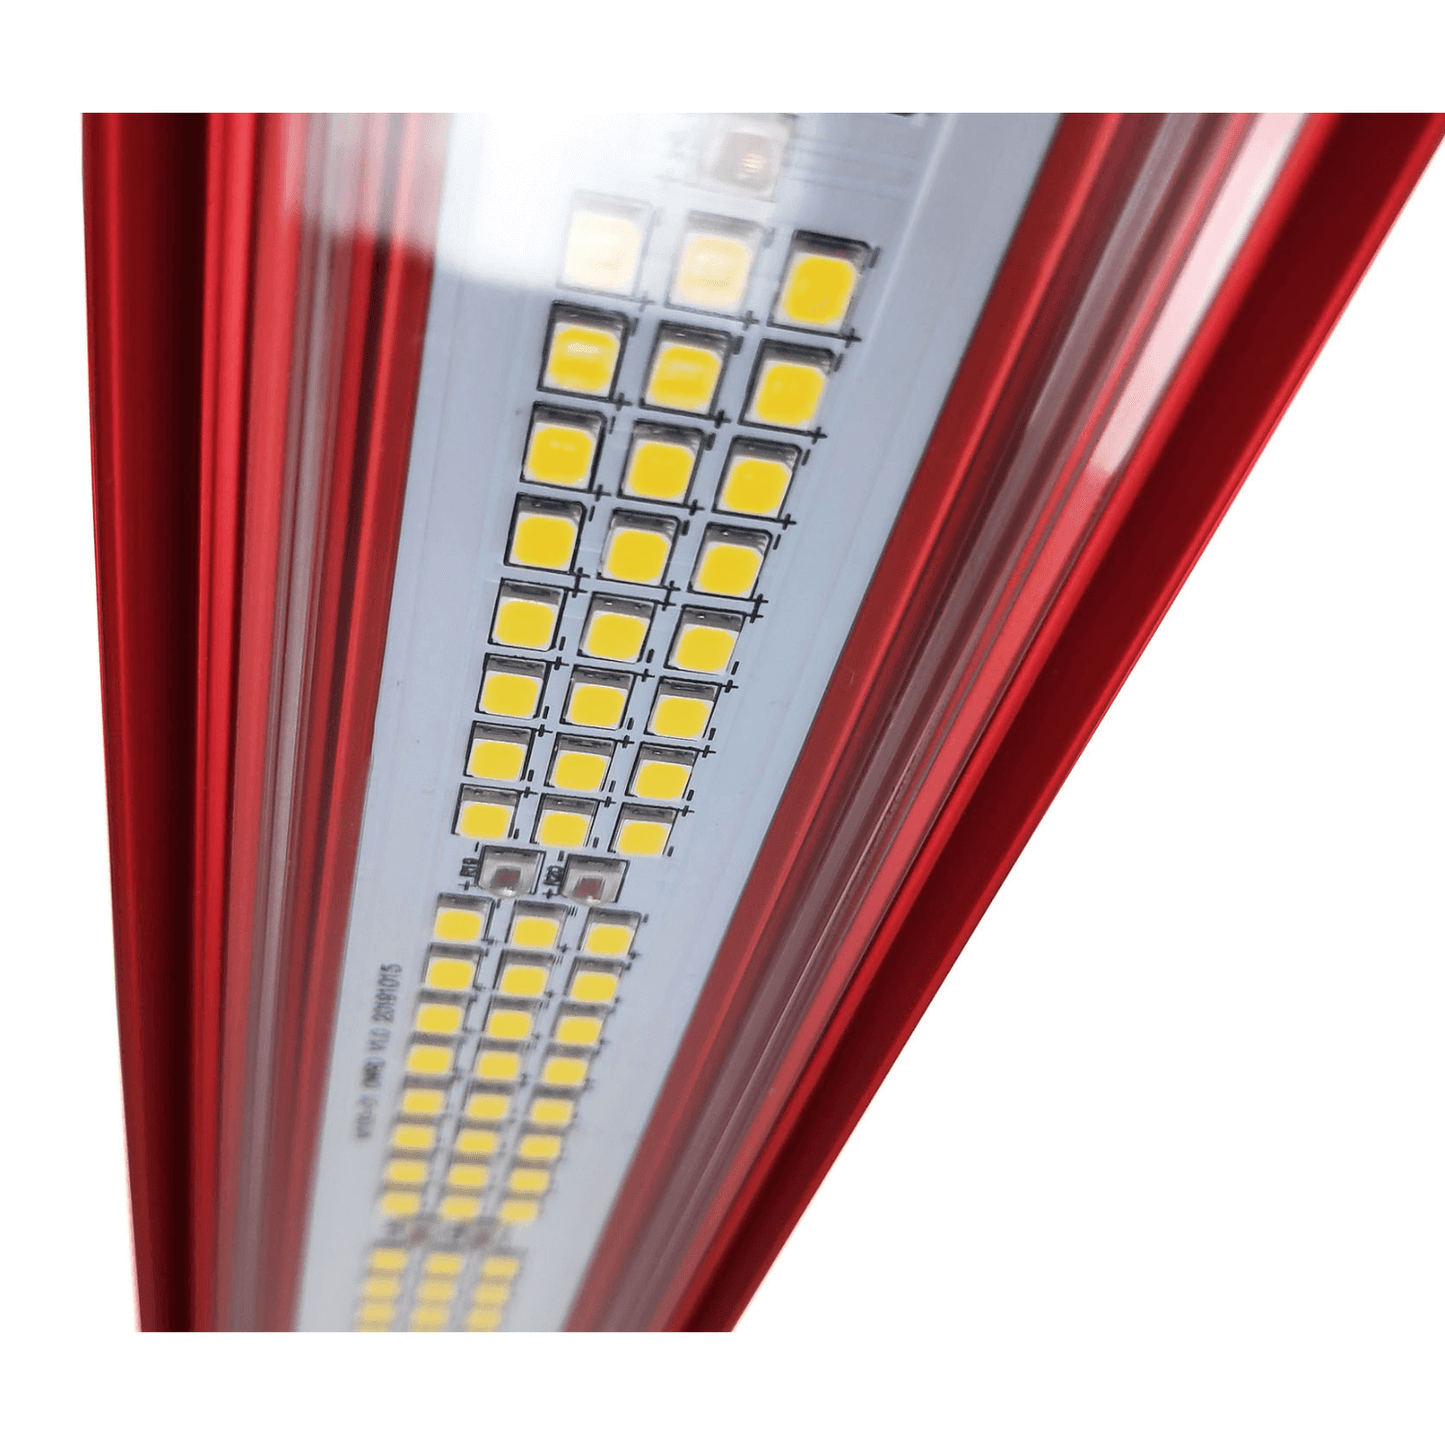 PhotonTek X 600W Pro LED Grow Light PTEKLED018 Grow Lights 5060560030973